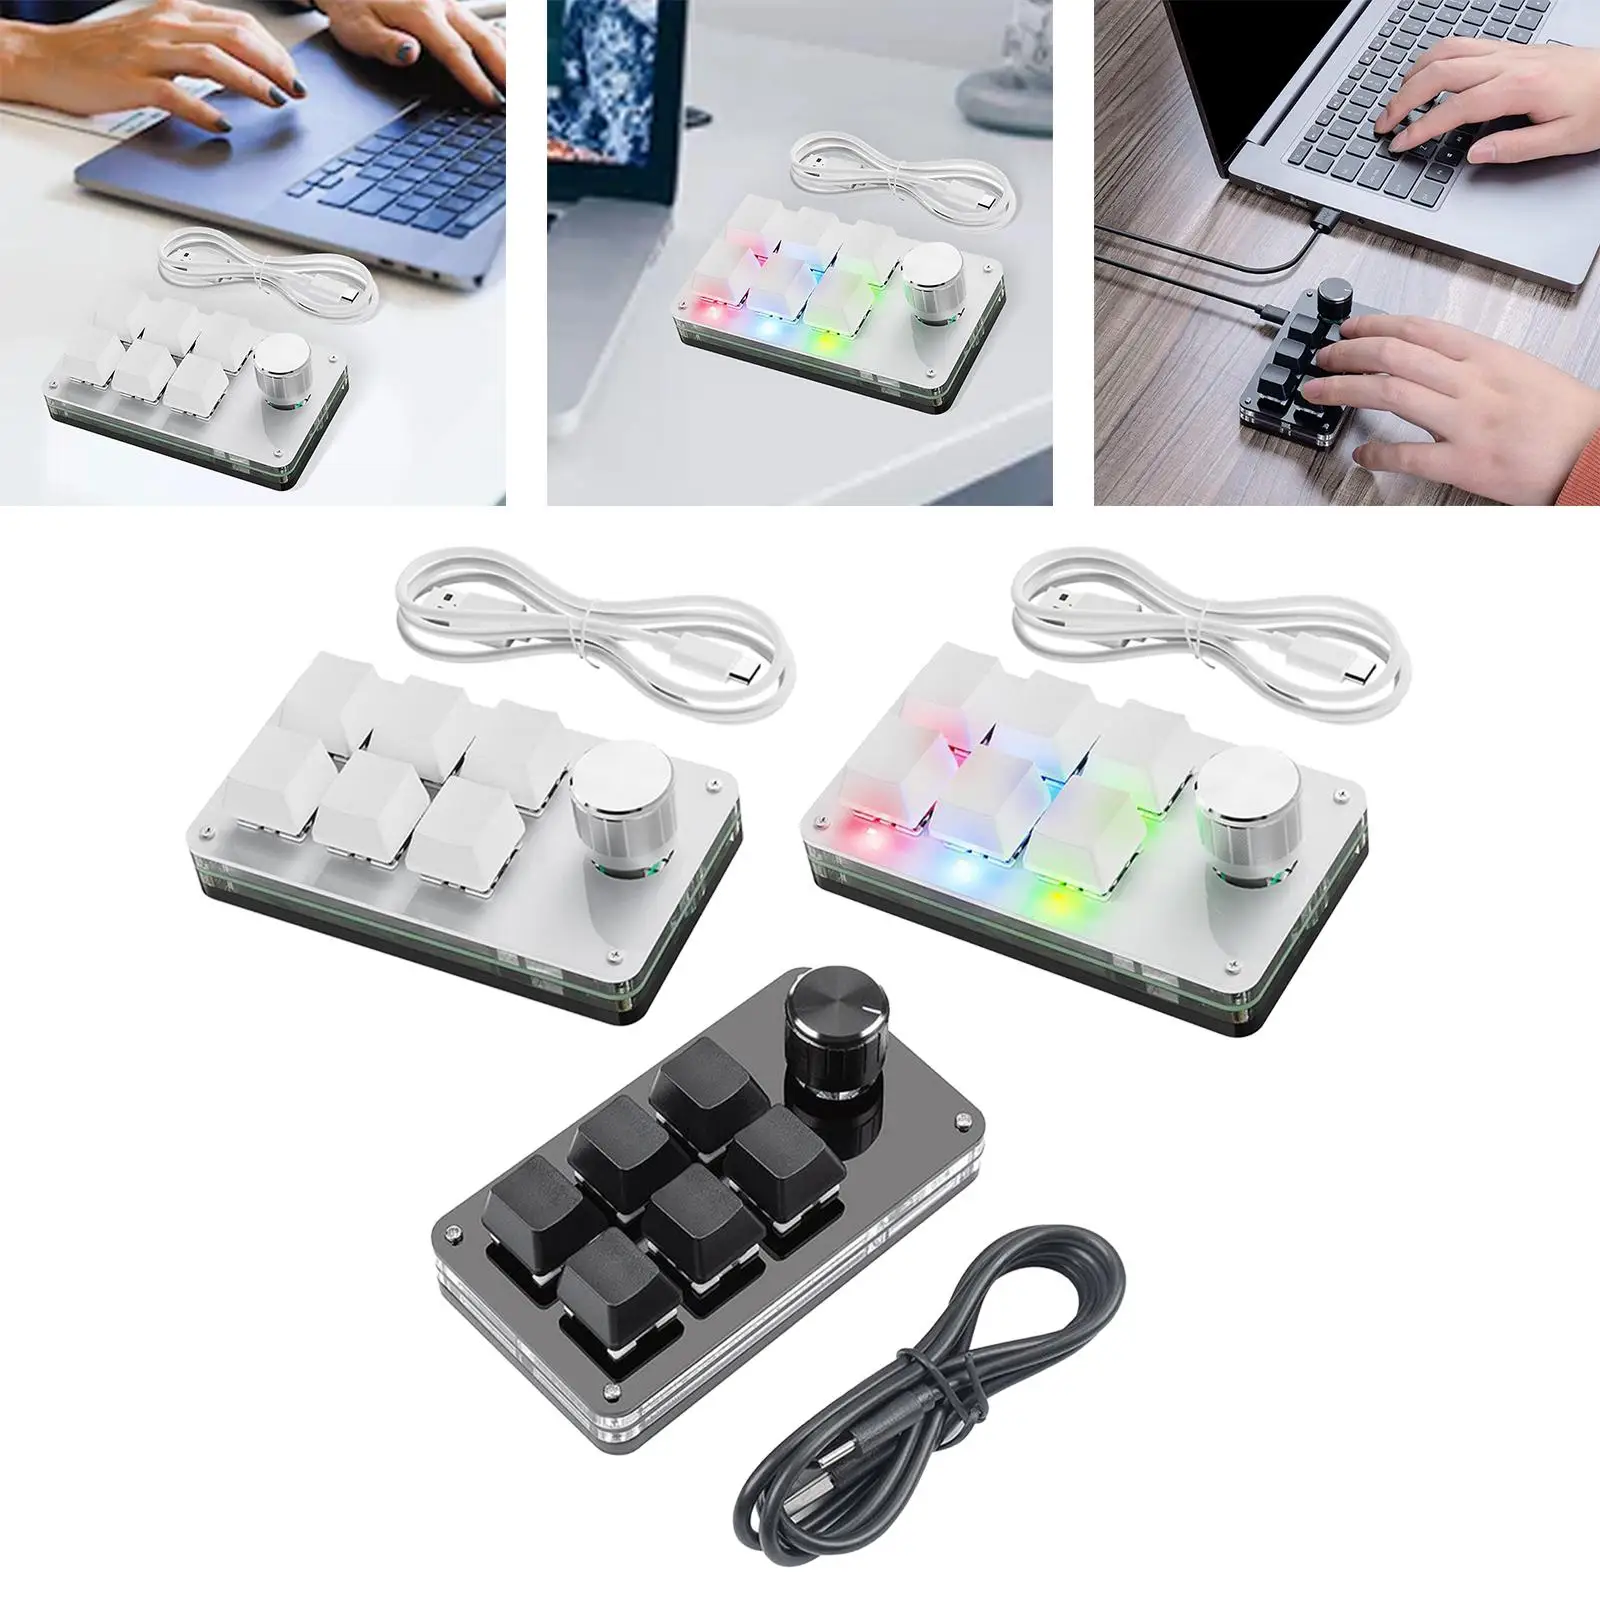 Programming macro Knob Keyboard 6 Keys Portable with USB Cable Programmable Keys